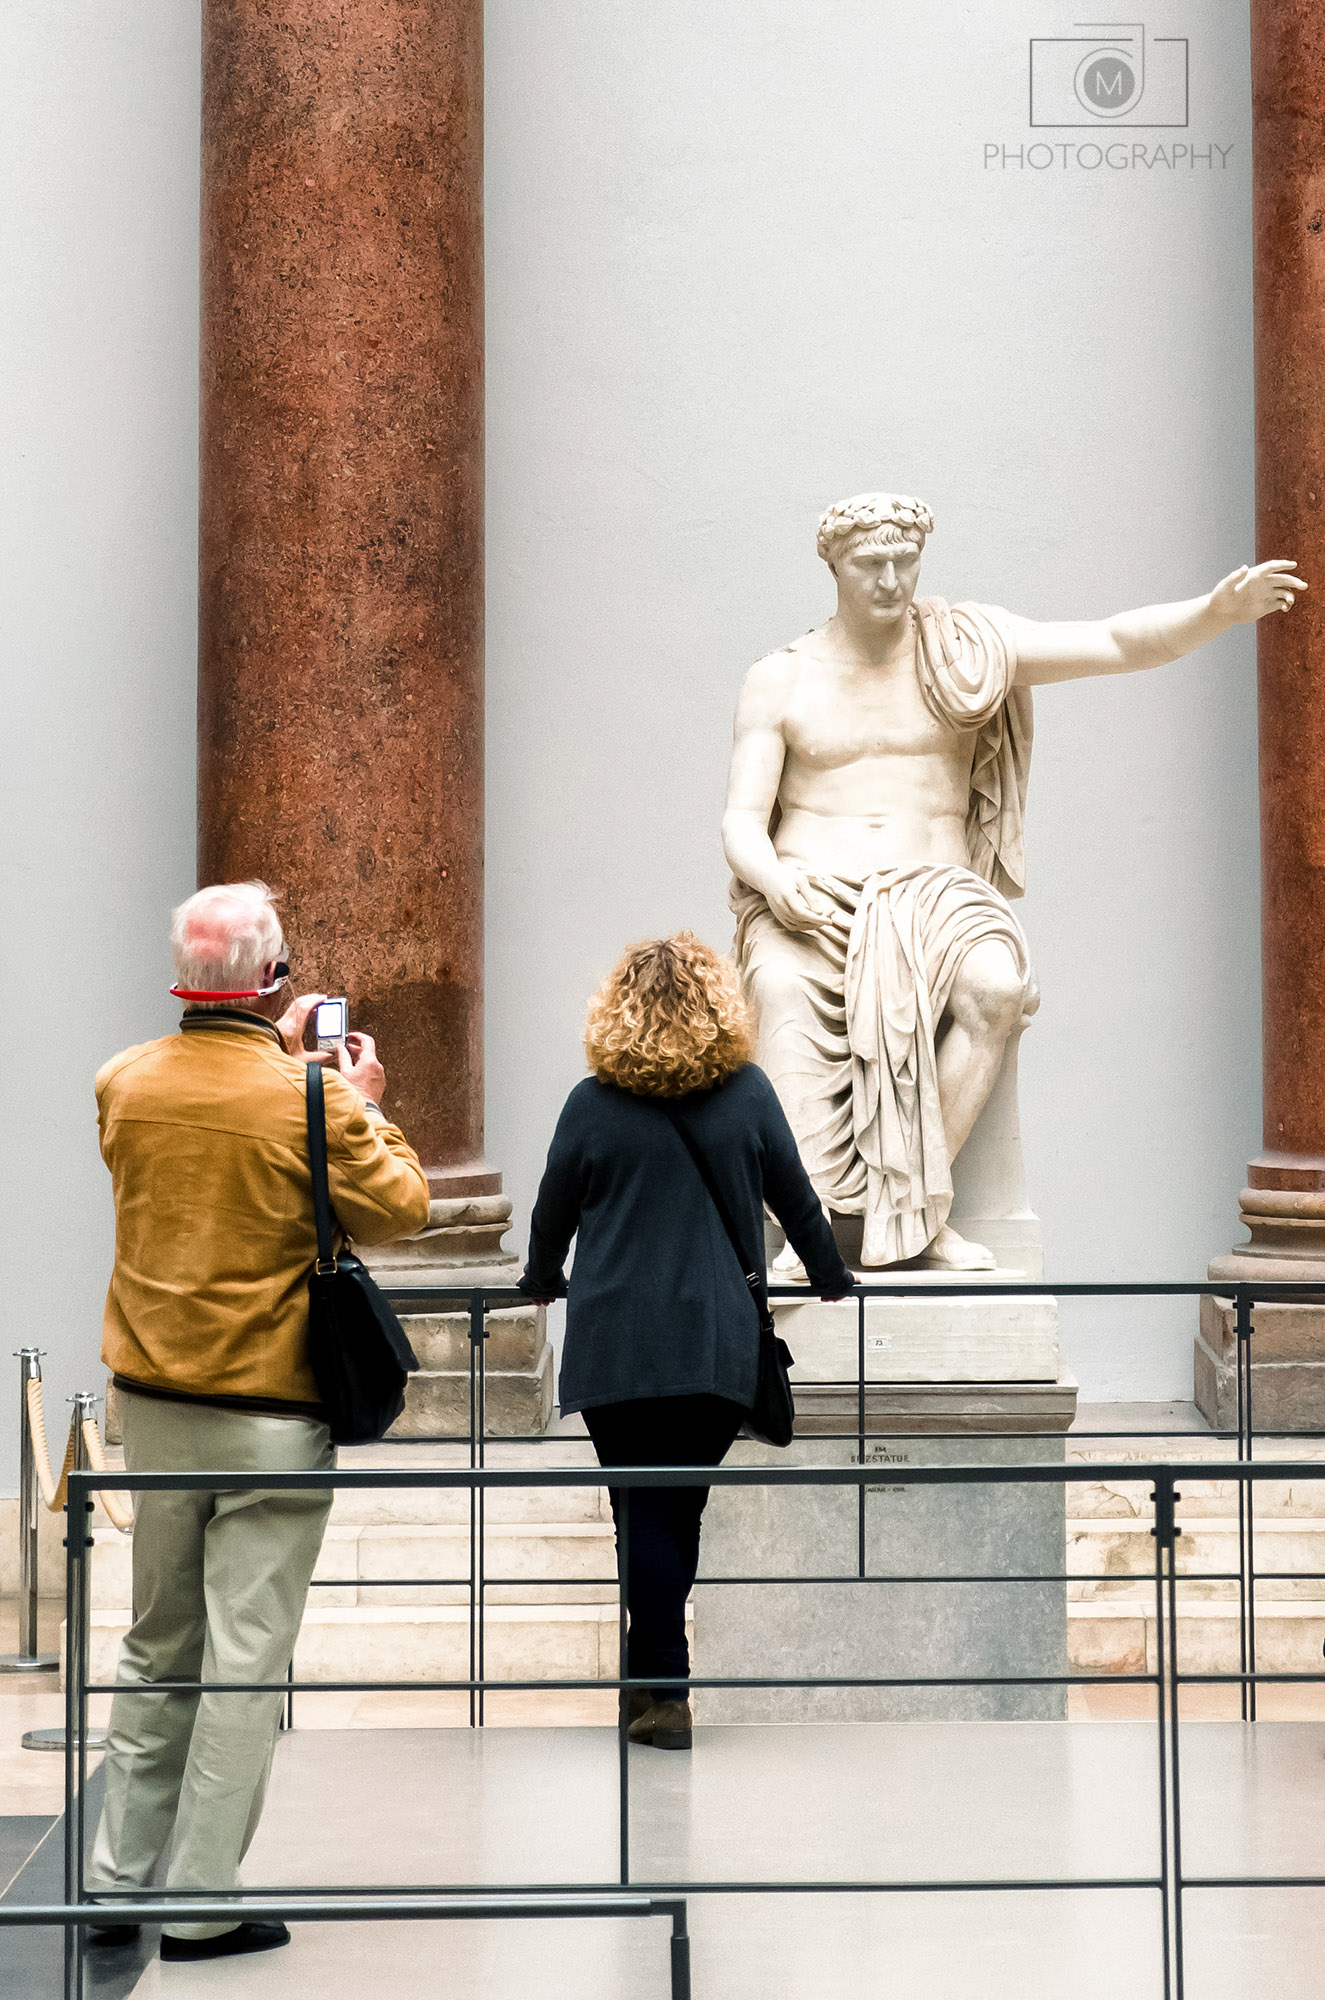 Pergamon múzeum v Berlíne